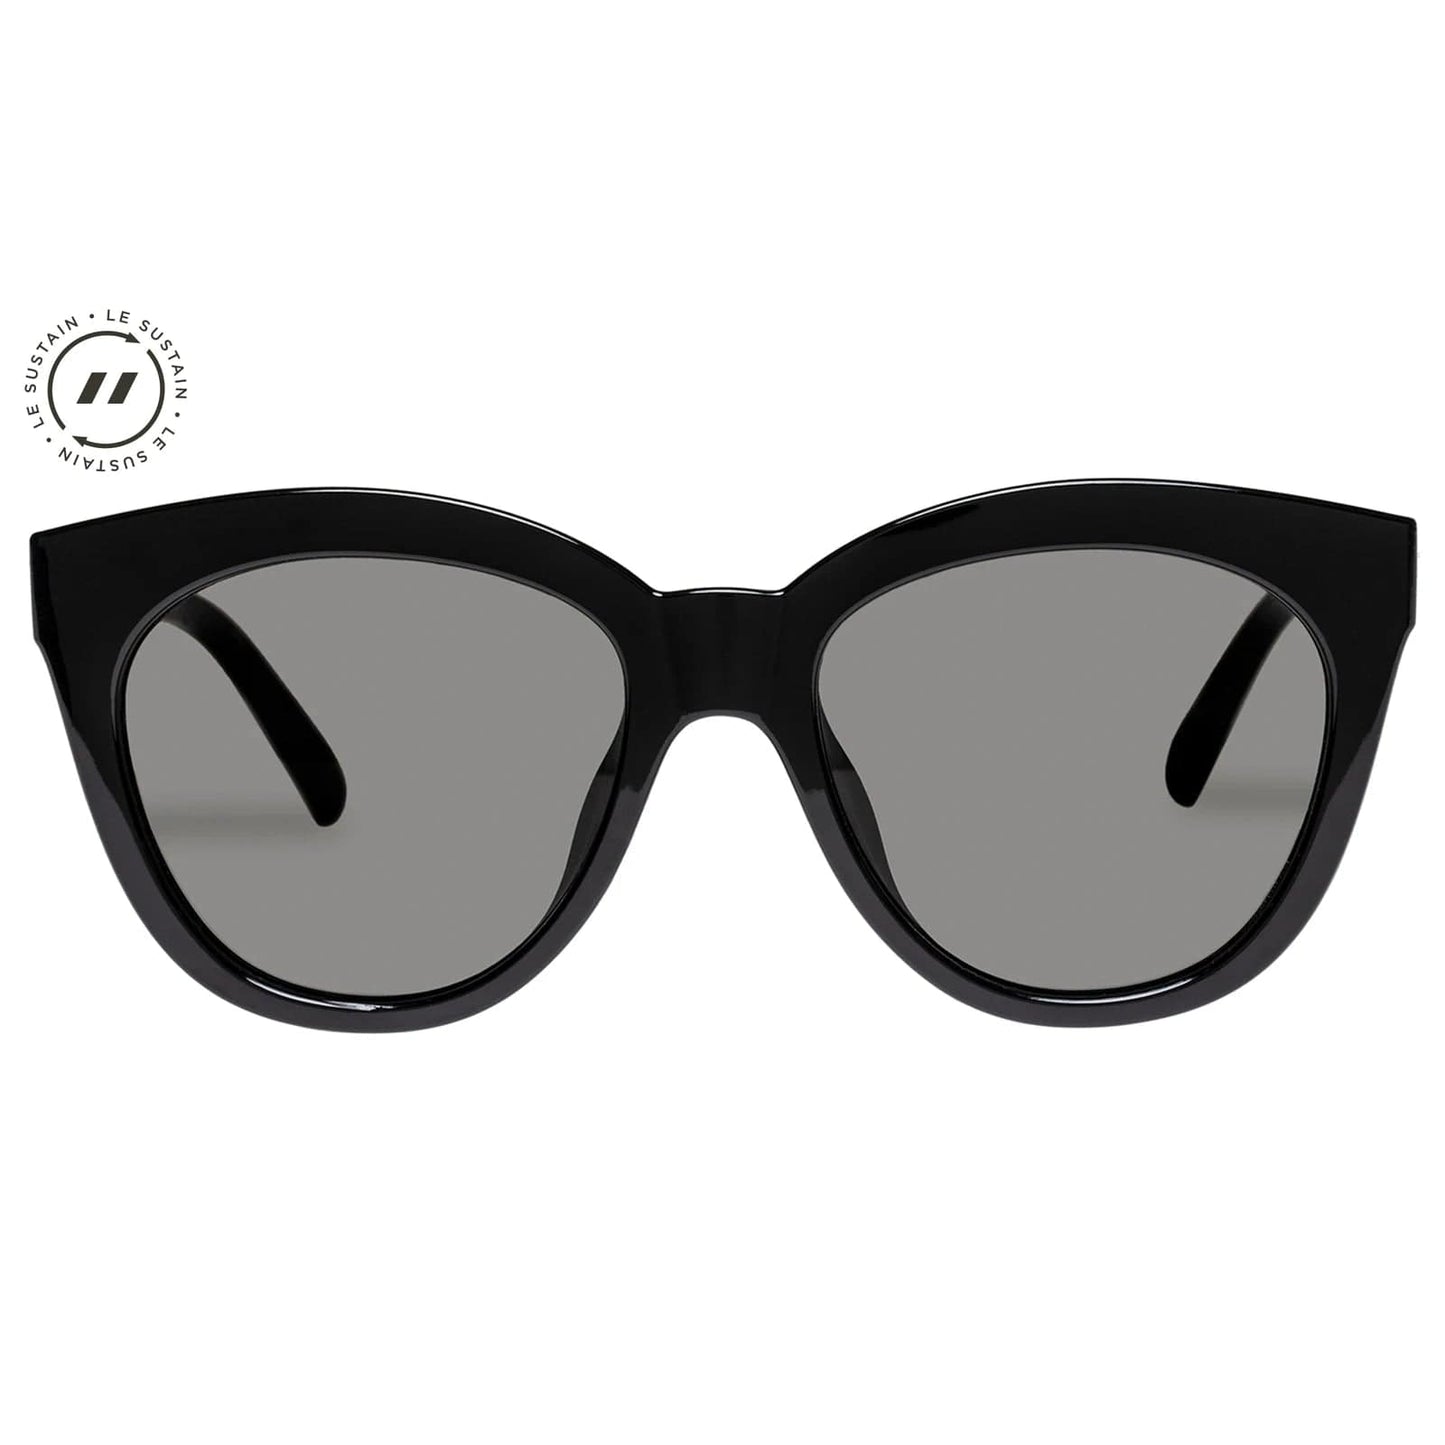 Le Specs Resumption Sunglasses - Black Sunglasses